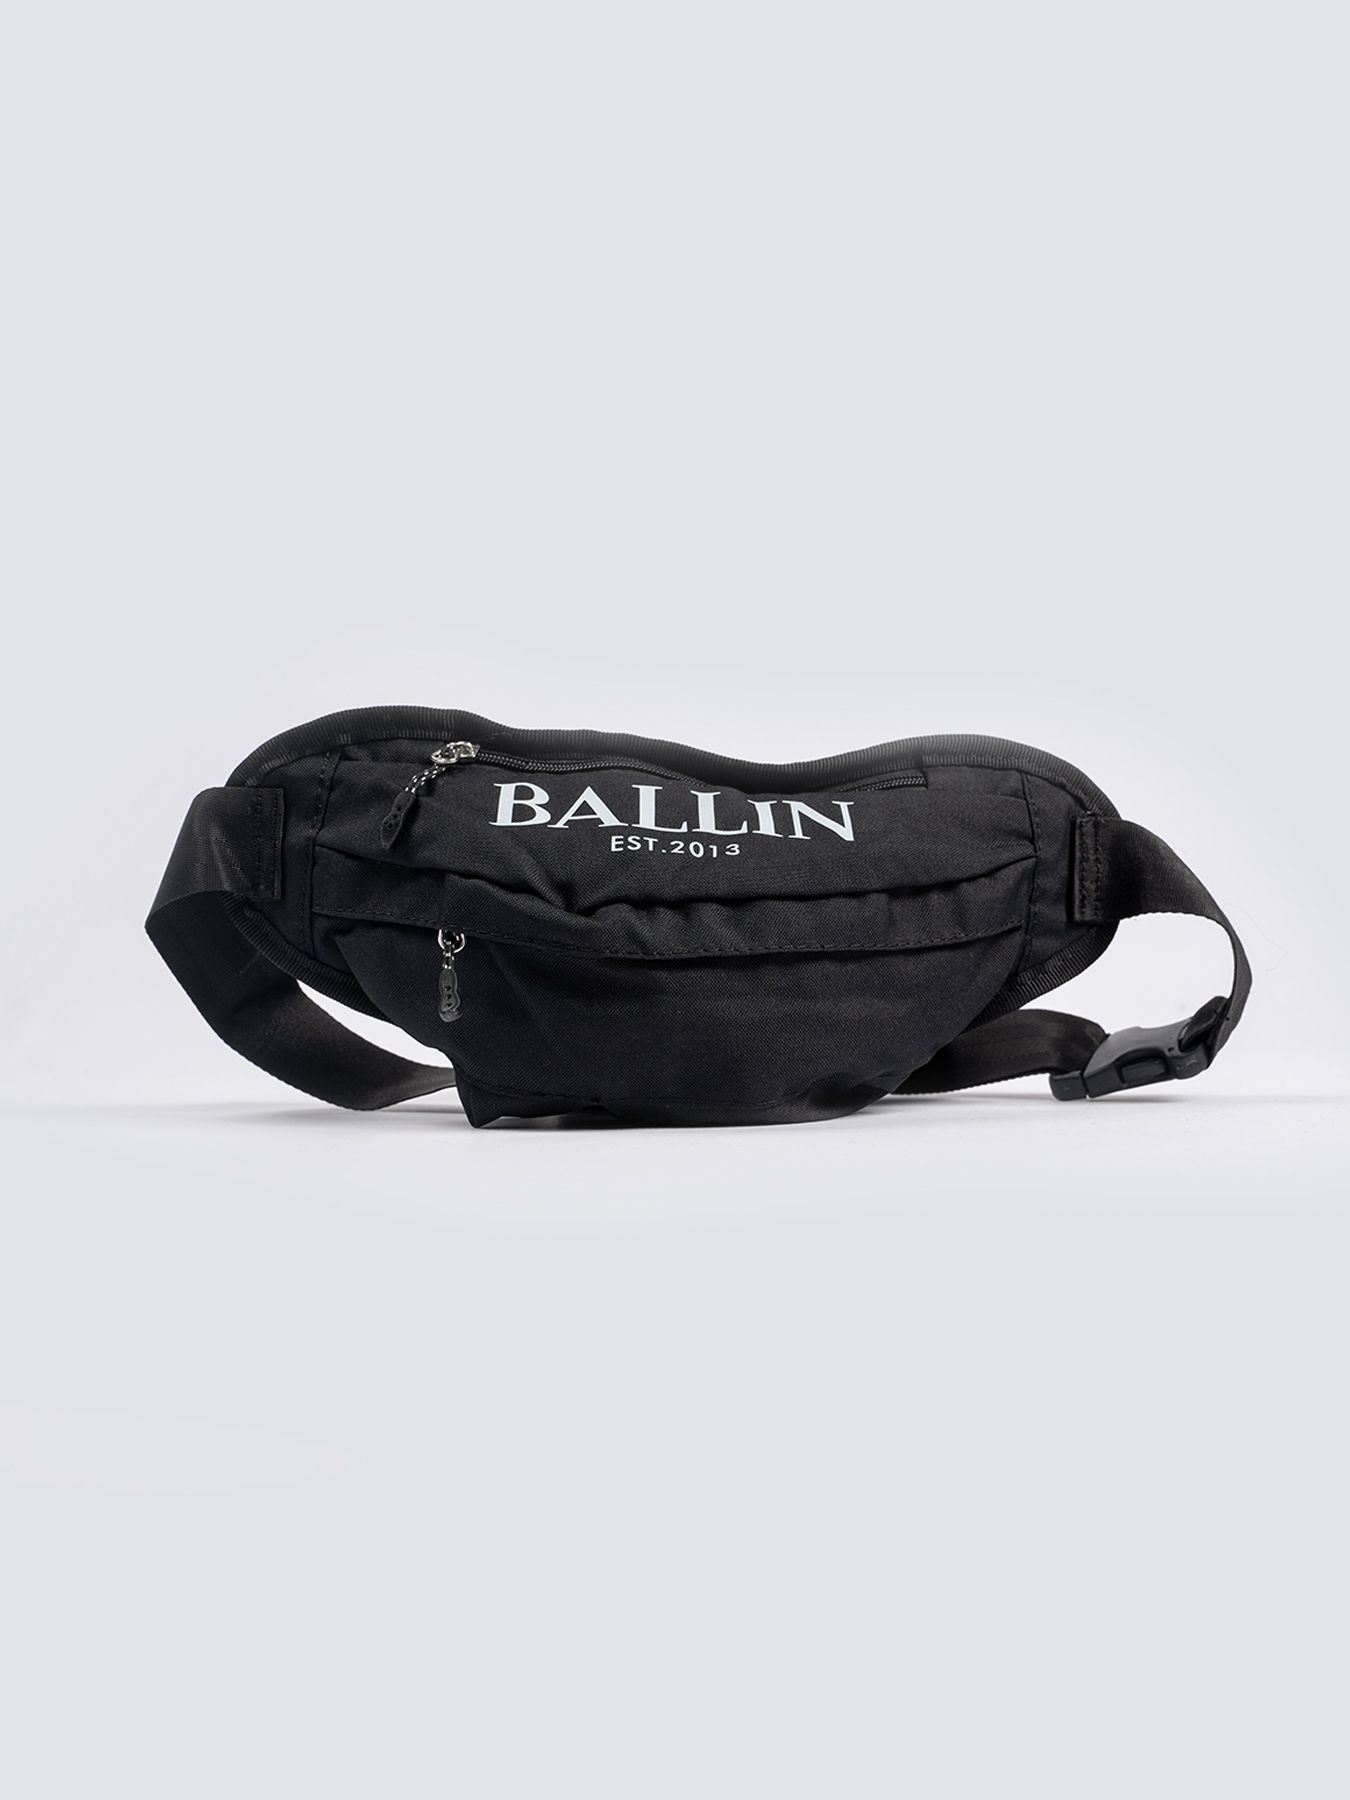 Ballin Ballin Tasje Zwart 00099336-Z1